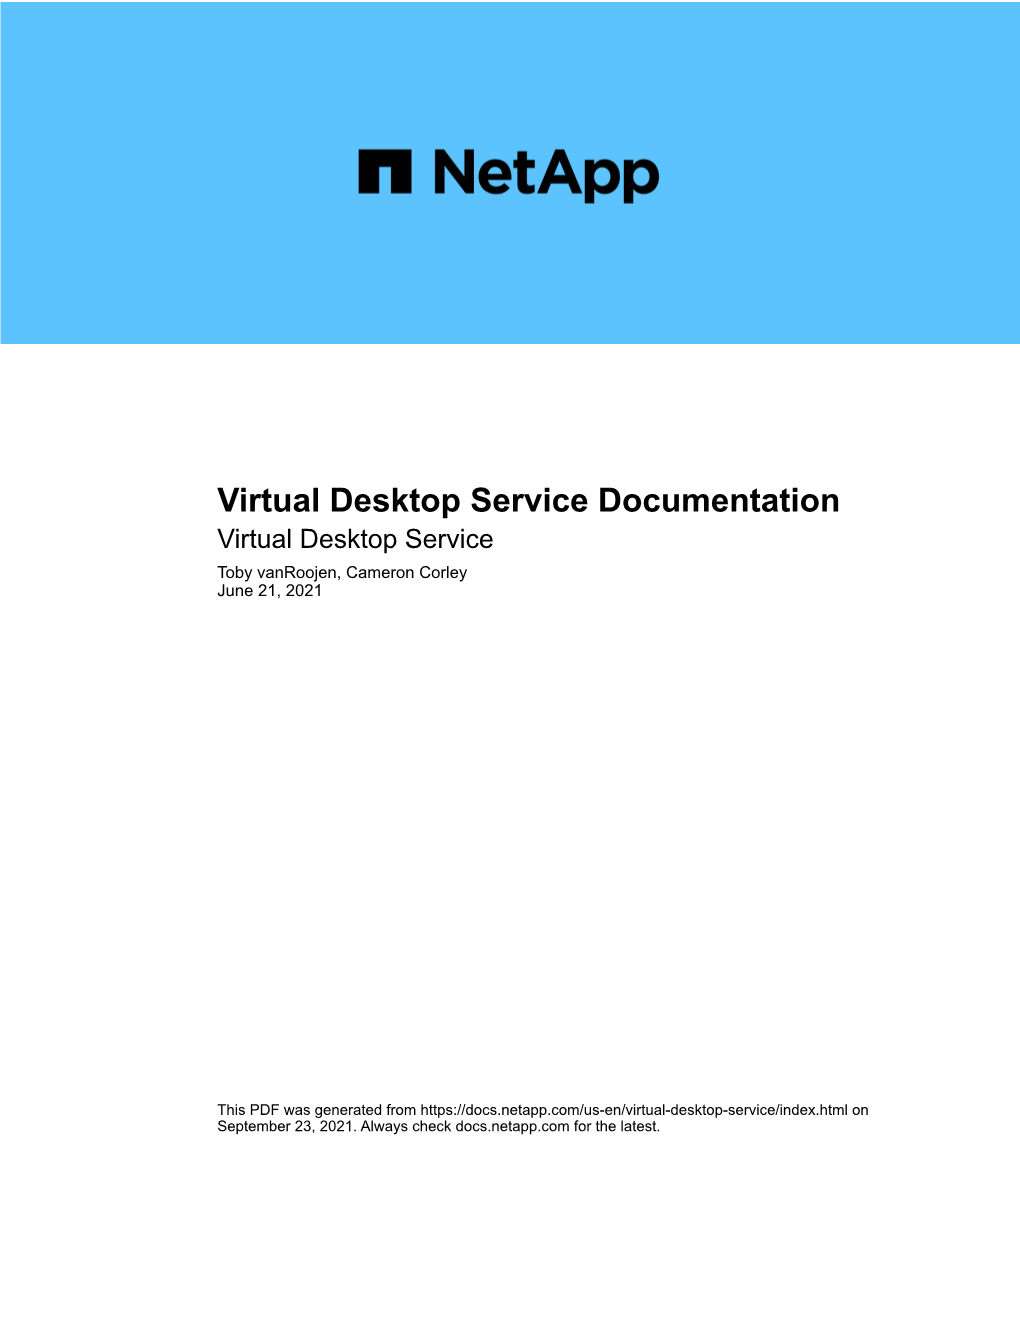 Virtual Desktop Service Documentation Virtual Desktop Service Toby Vanroojen, Cameron Corley June 21, 2021